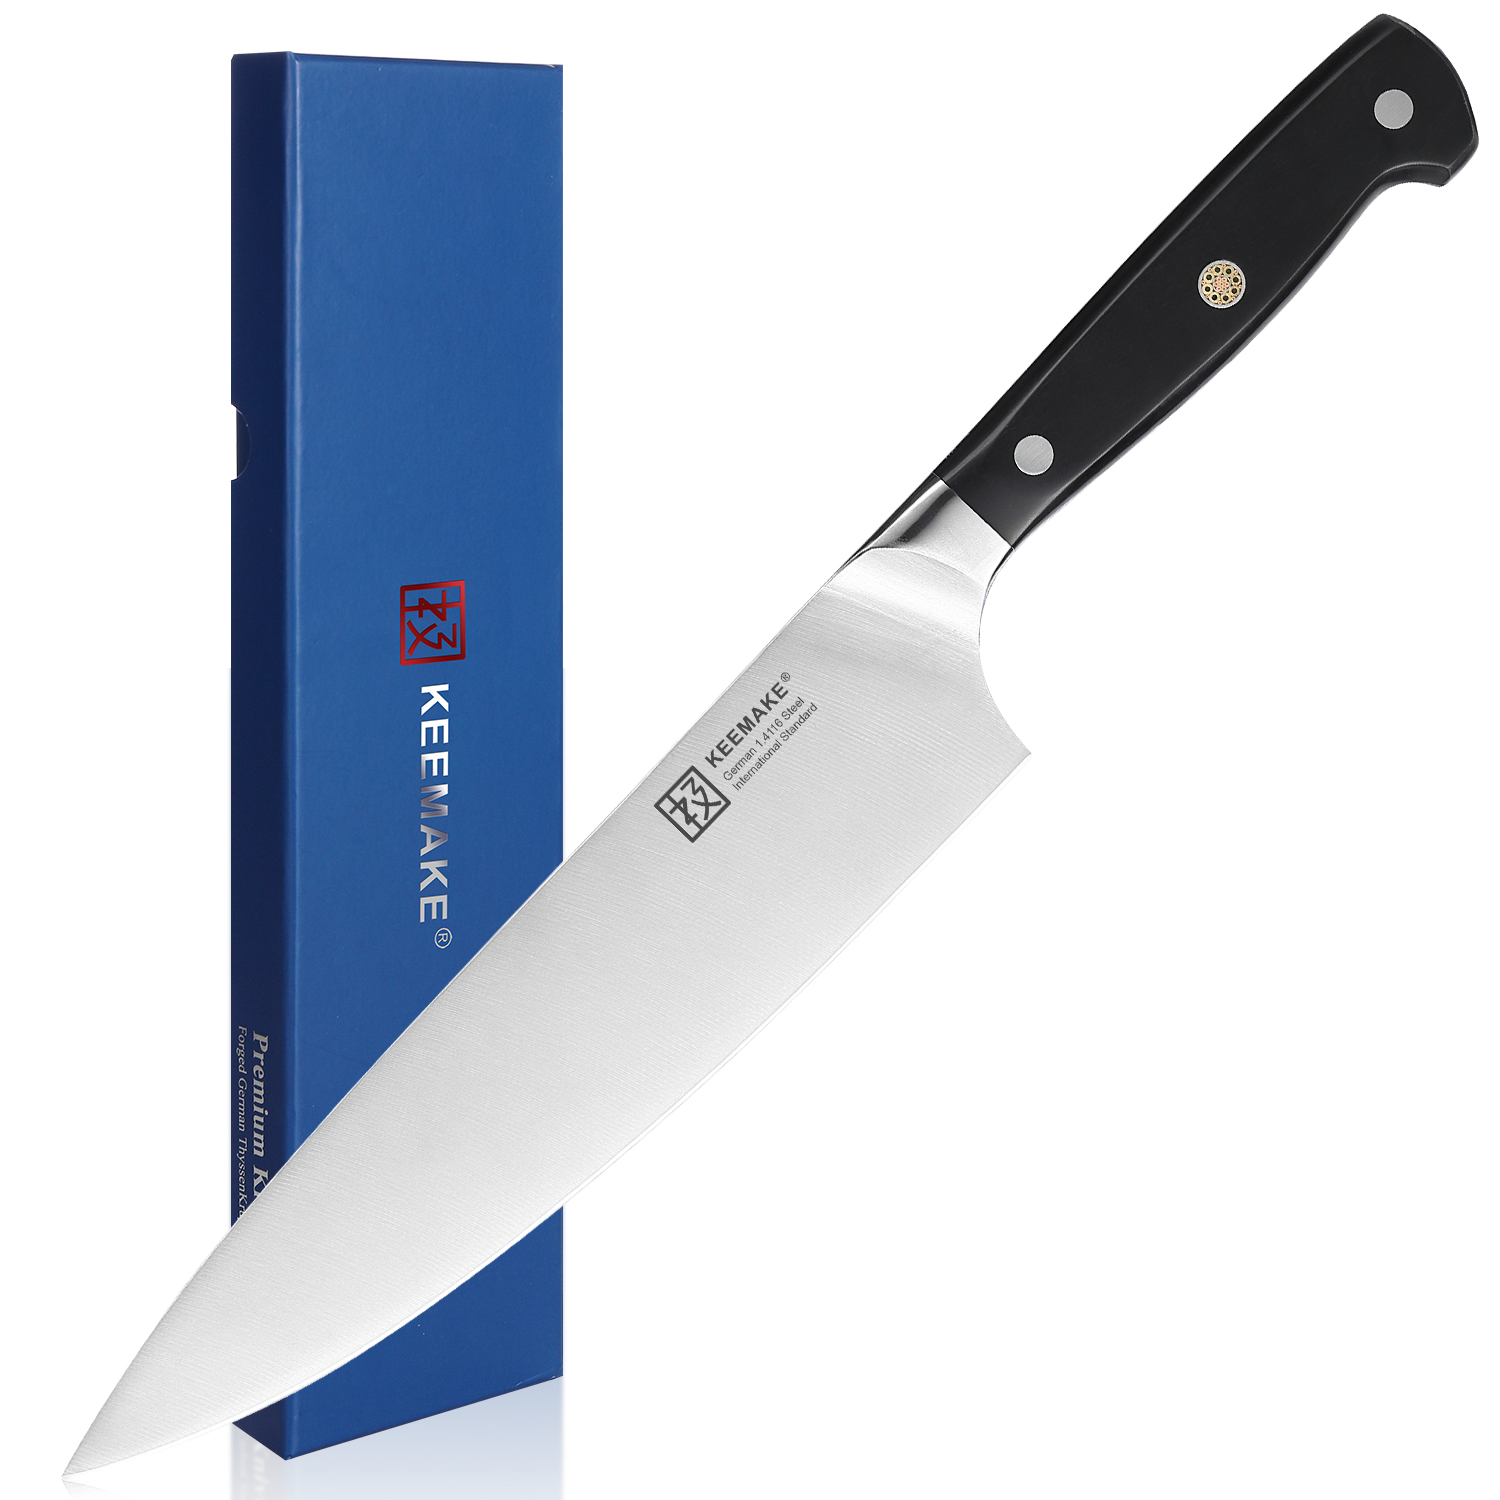 KEEMAKE Kitchen Knife Professional Chef Knife 8 inch